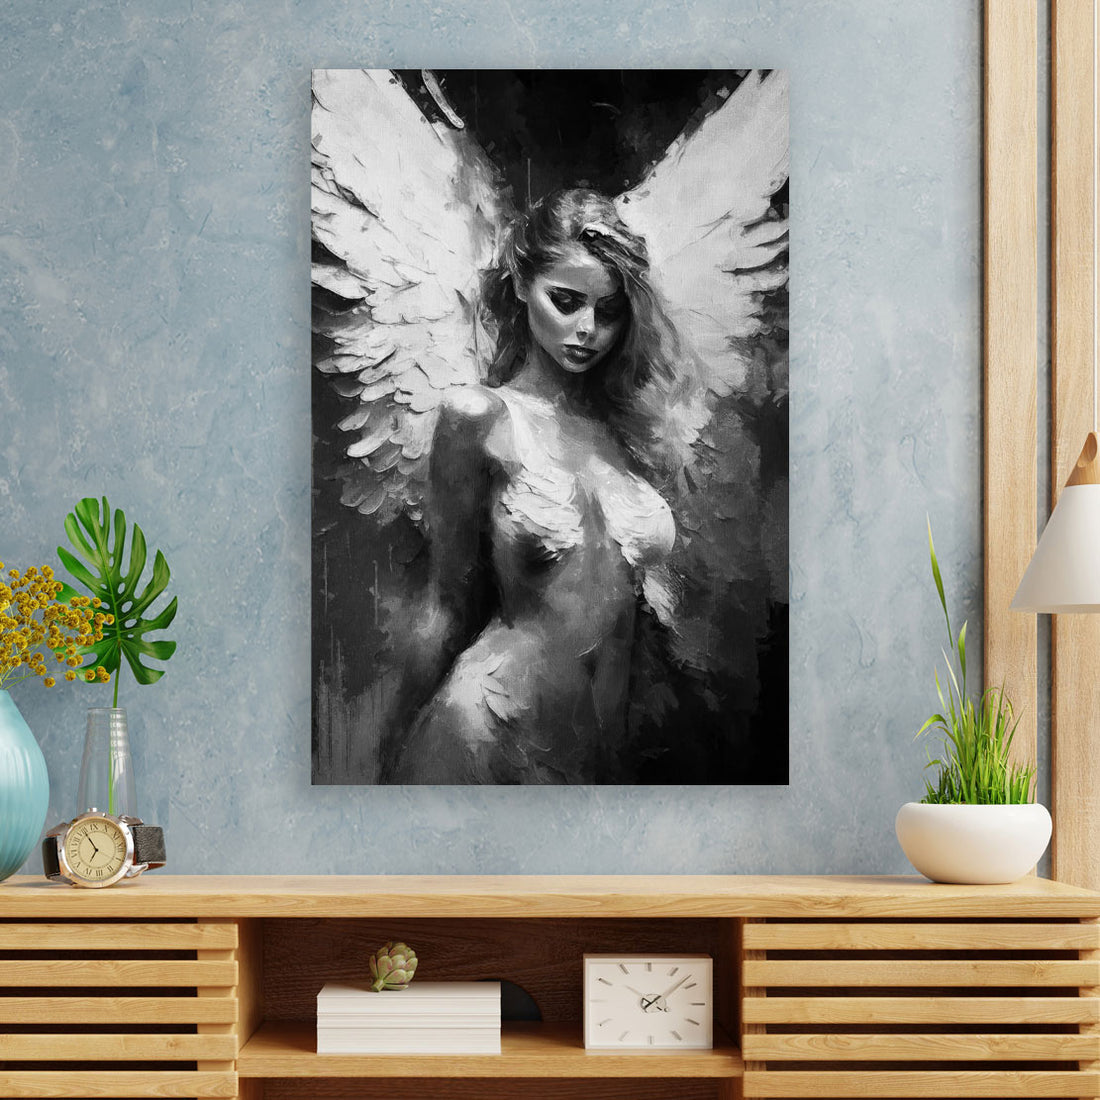 Wandbild Engel schwarz weiß